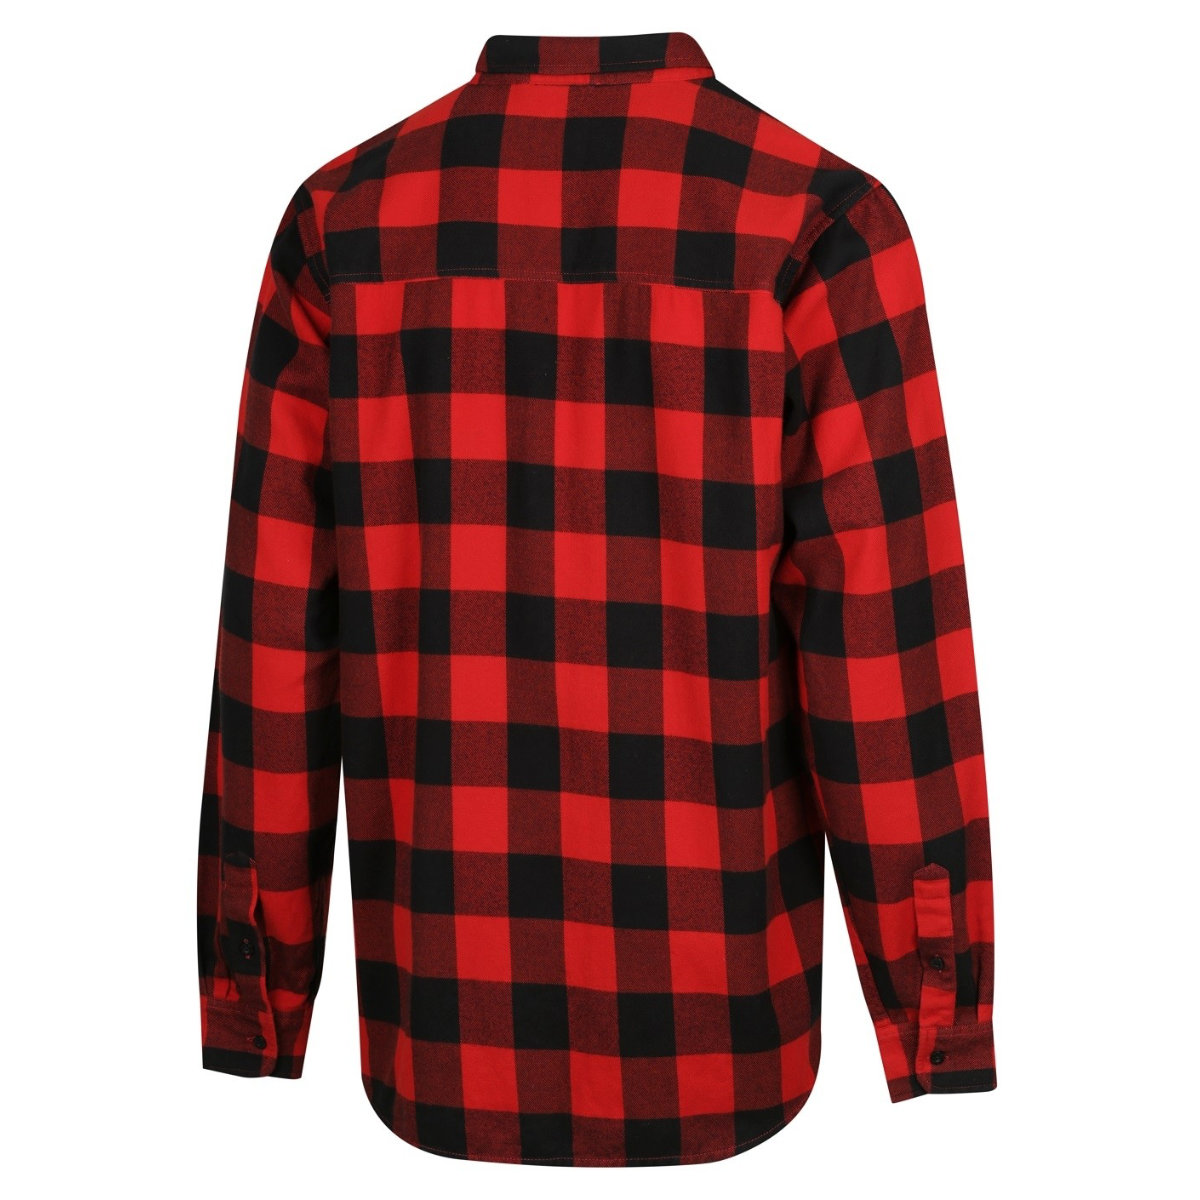 Ridgeline Organic Check Shirt - Cotton Flannelette Top